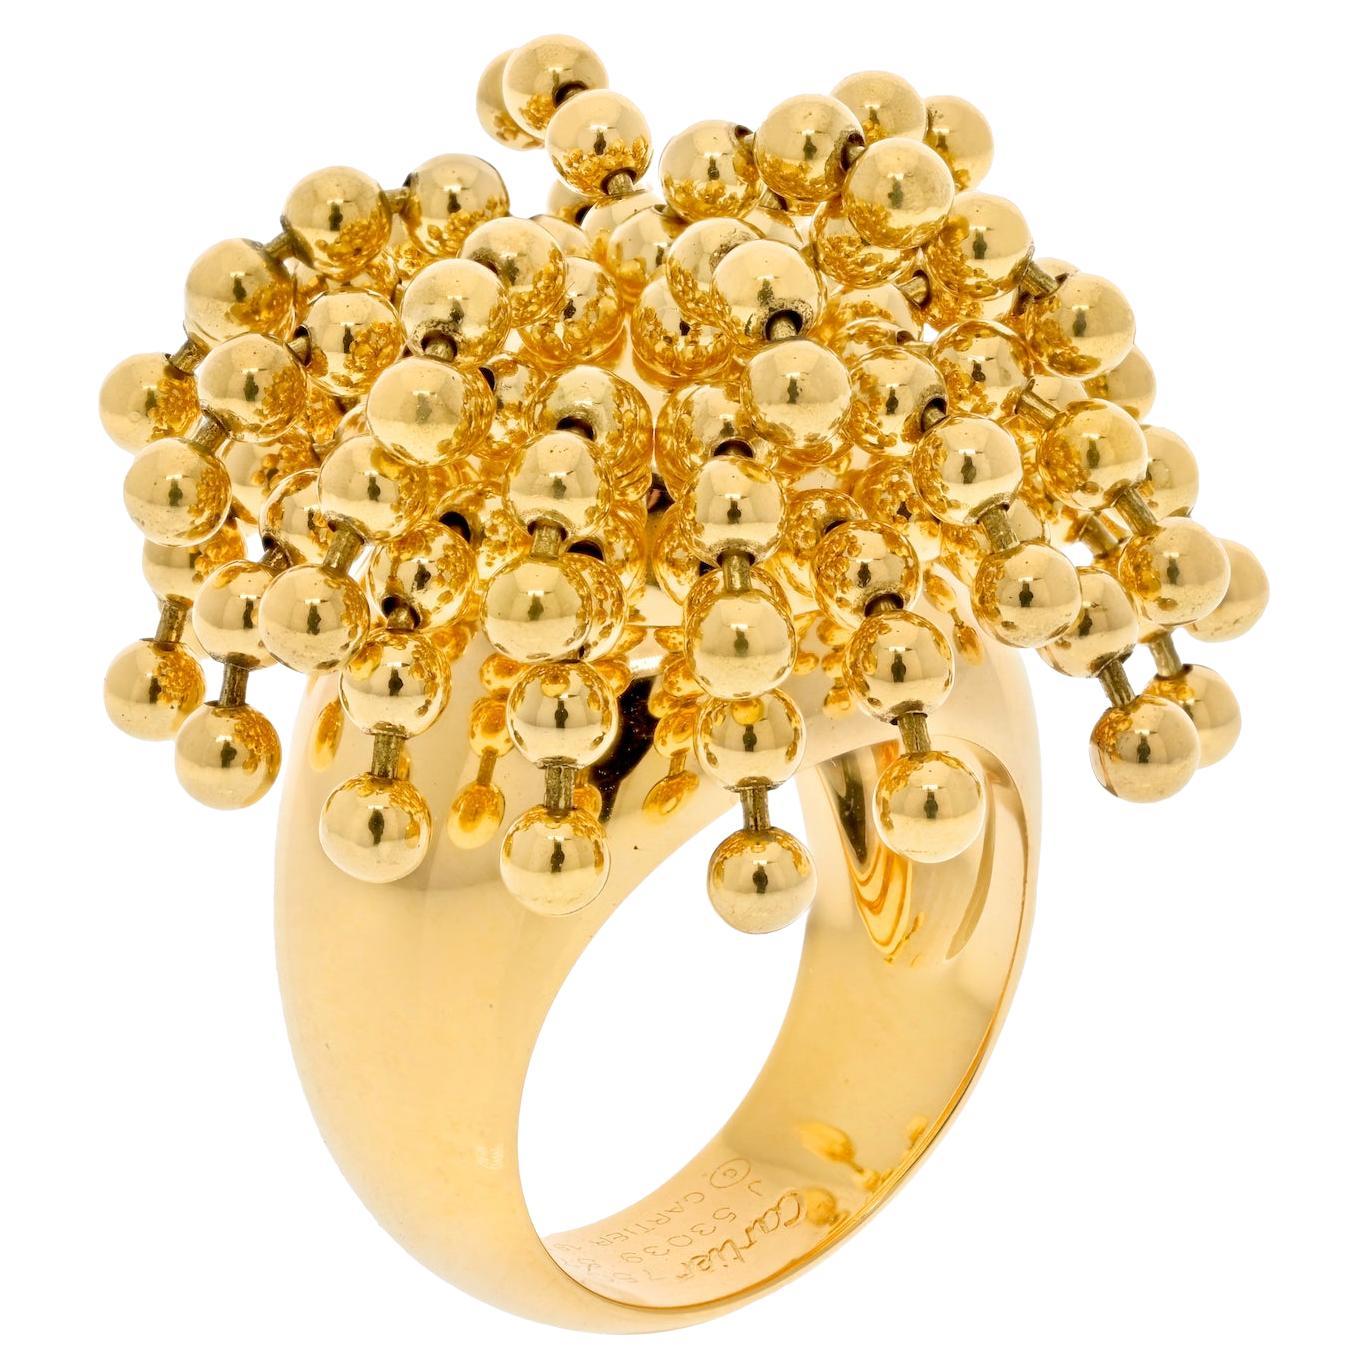 Cartier 18K Yellow Gold Paris Nouvelle Vague Articulated Bead Ring